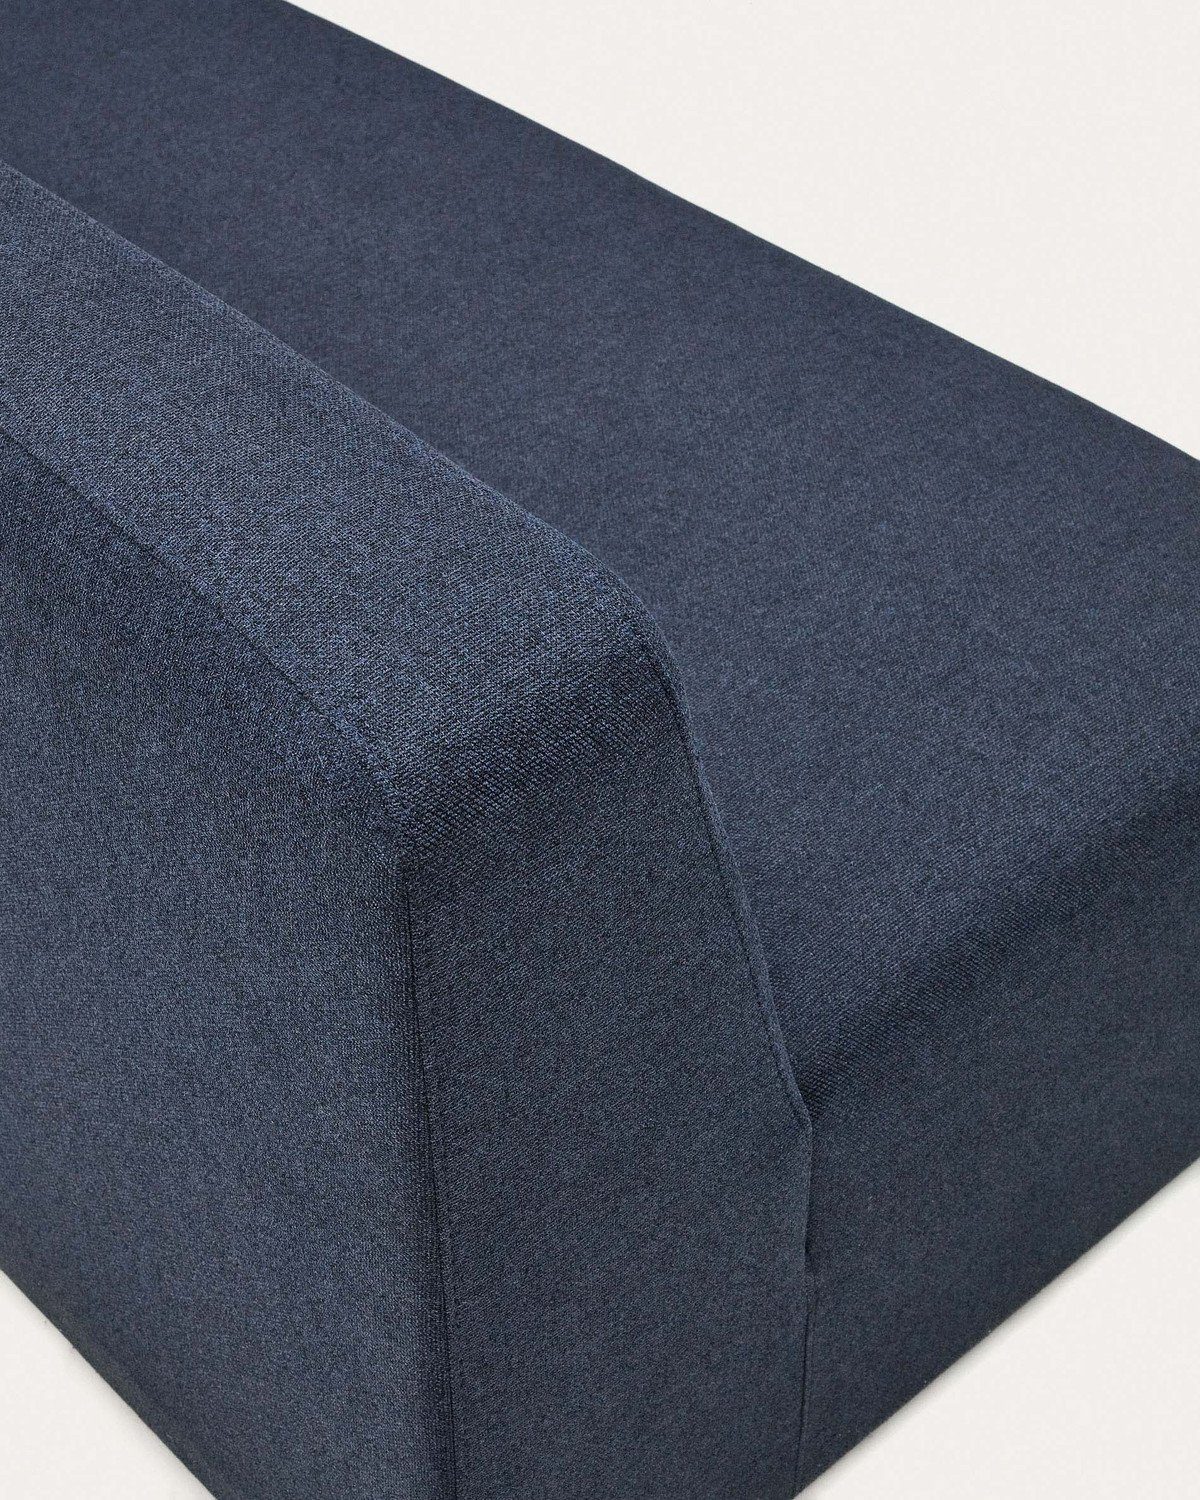 150x 89 78 Sofa x cm 2-Sitzer-Modul Blau Modul Sitzgelegenheit Natur24 Neu Neom